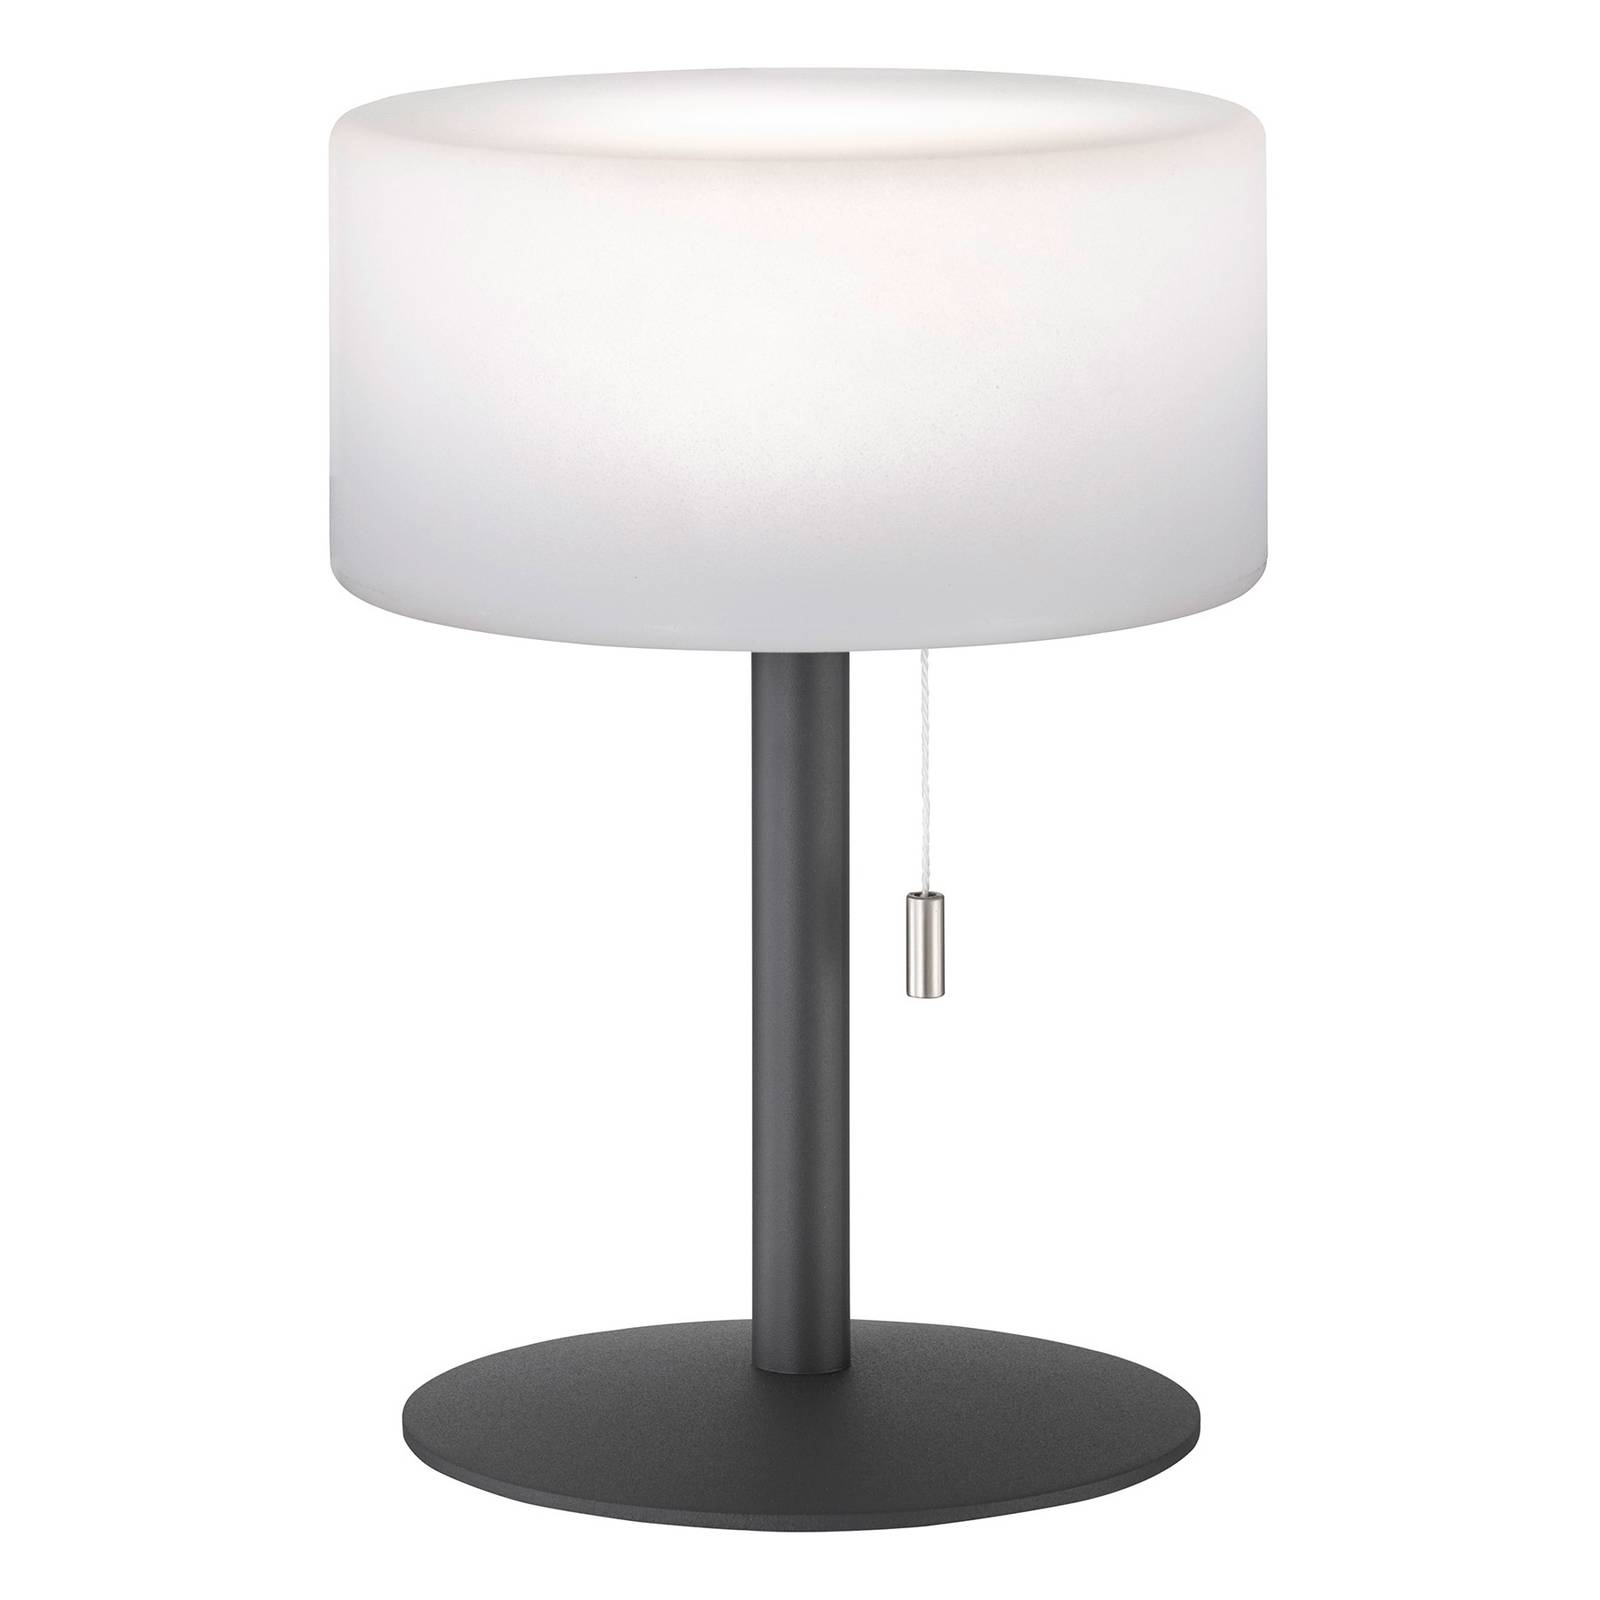 Image of Lampe à poser LED Cadiz, RVB 4052231501463